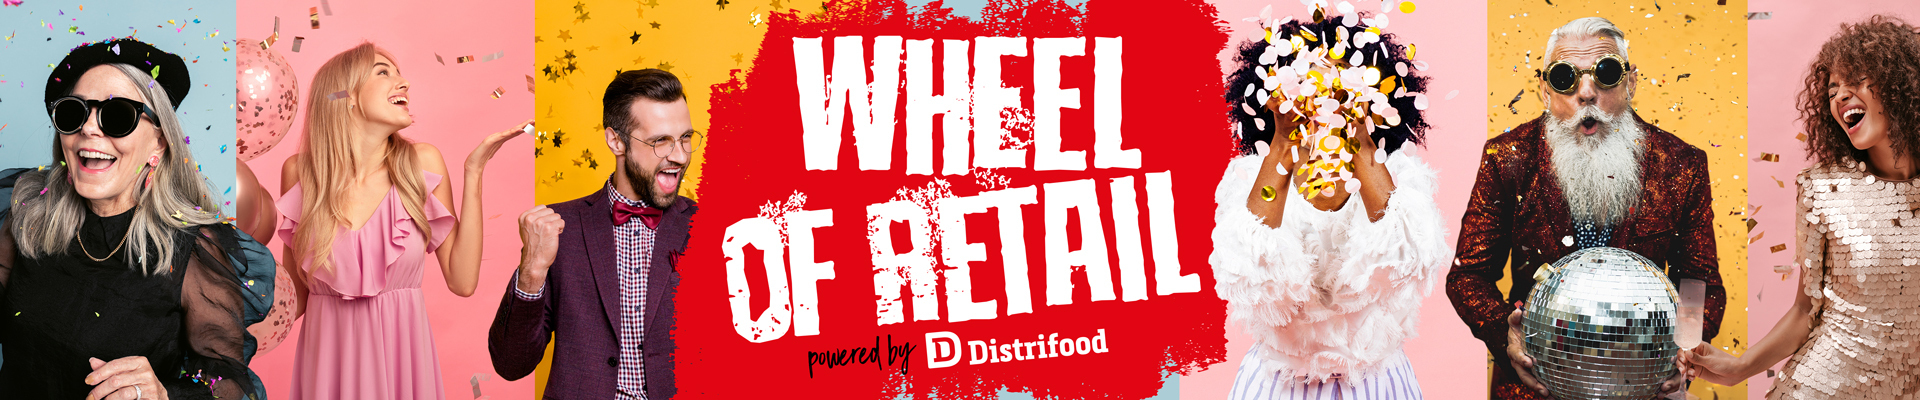 Wheel of Retail